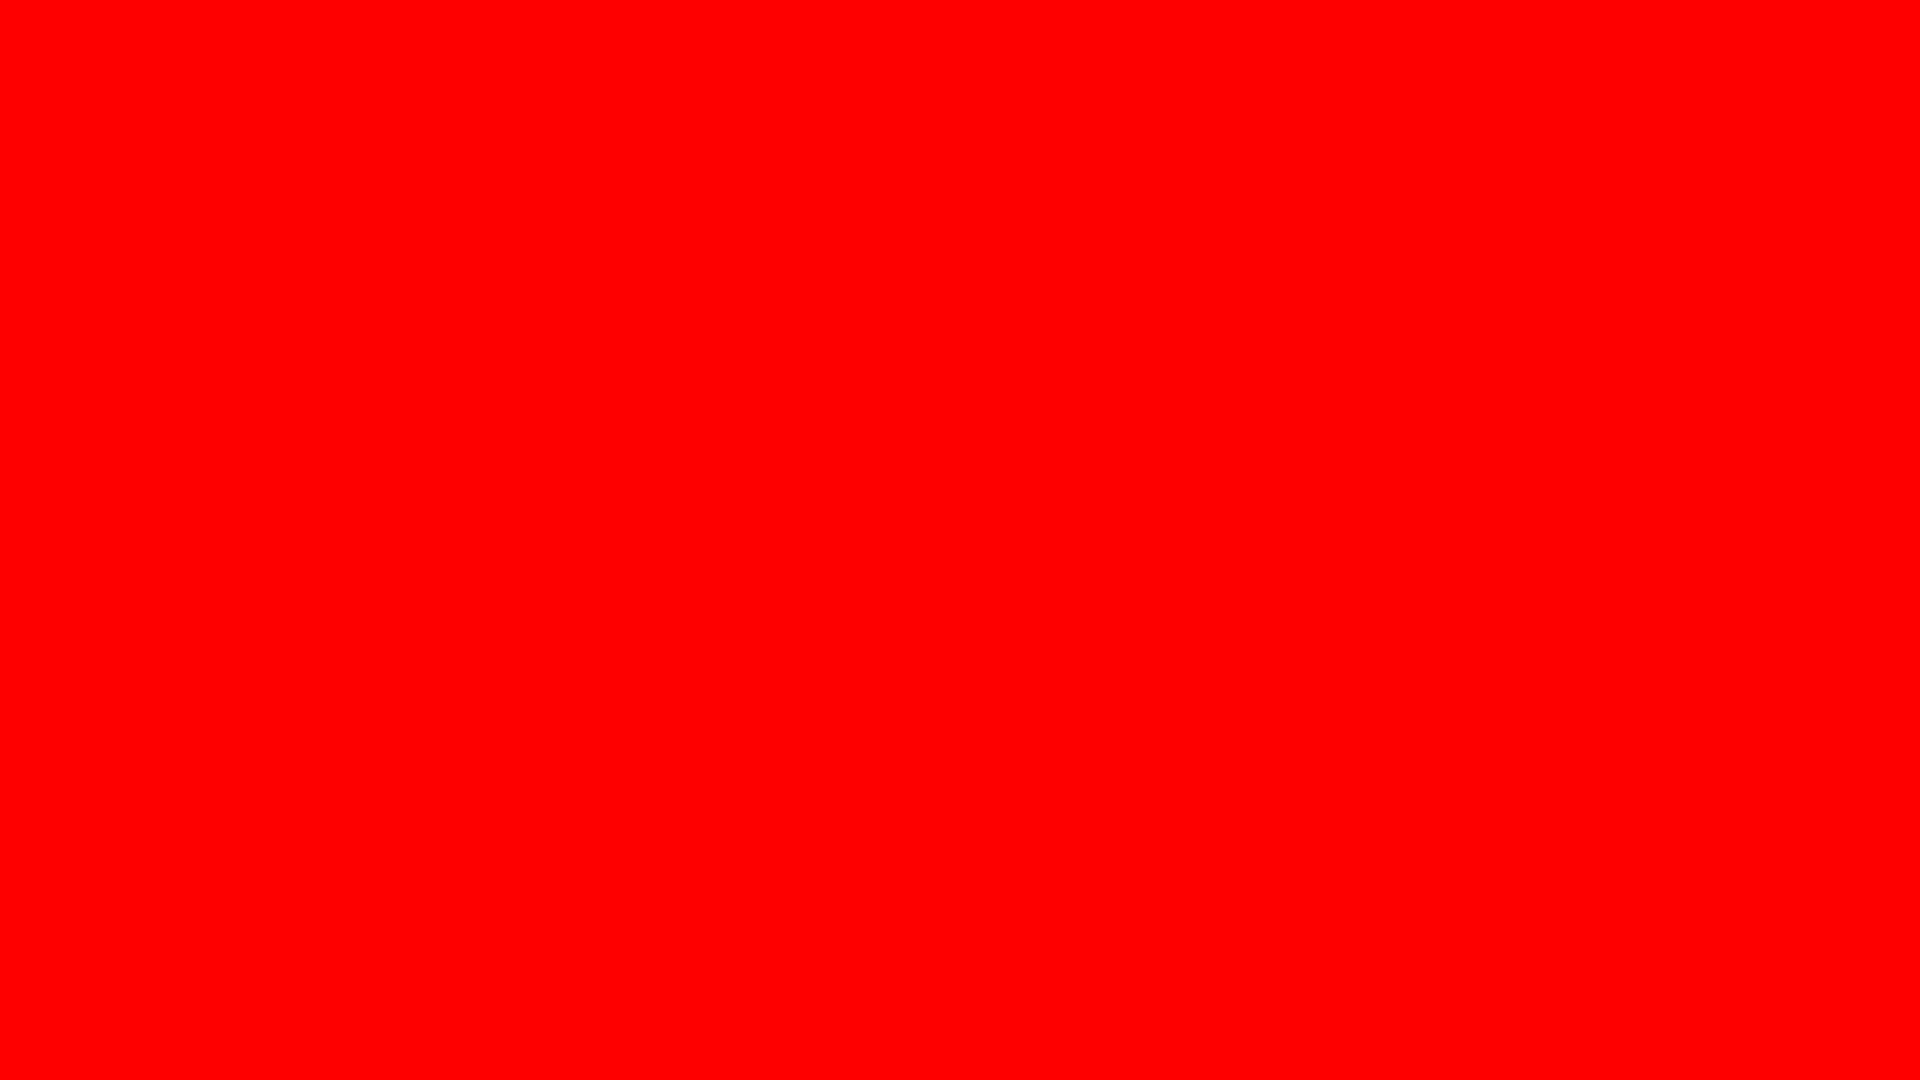 Background Merah